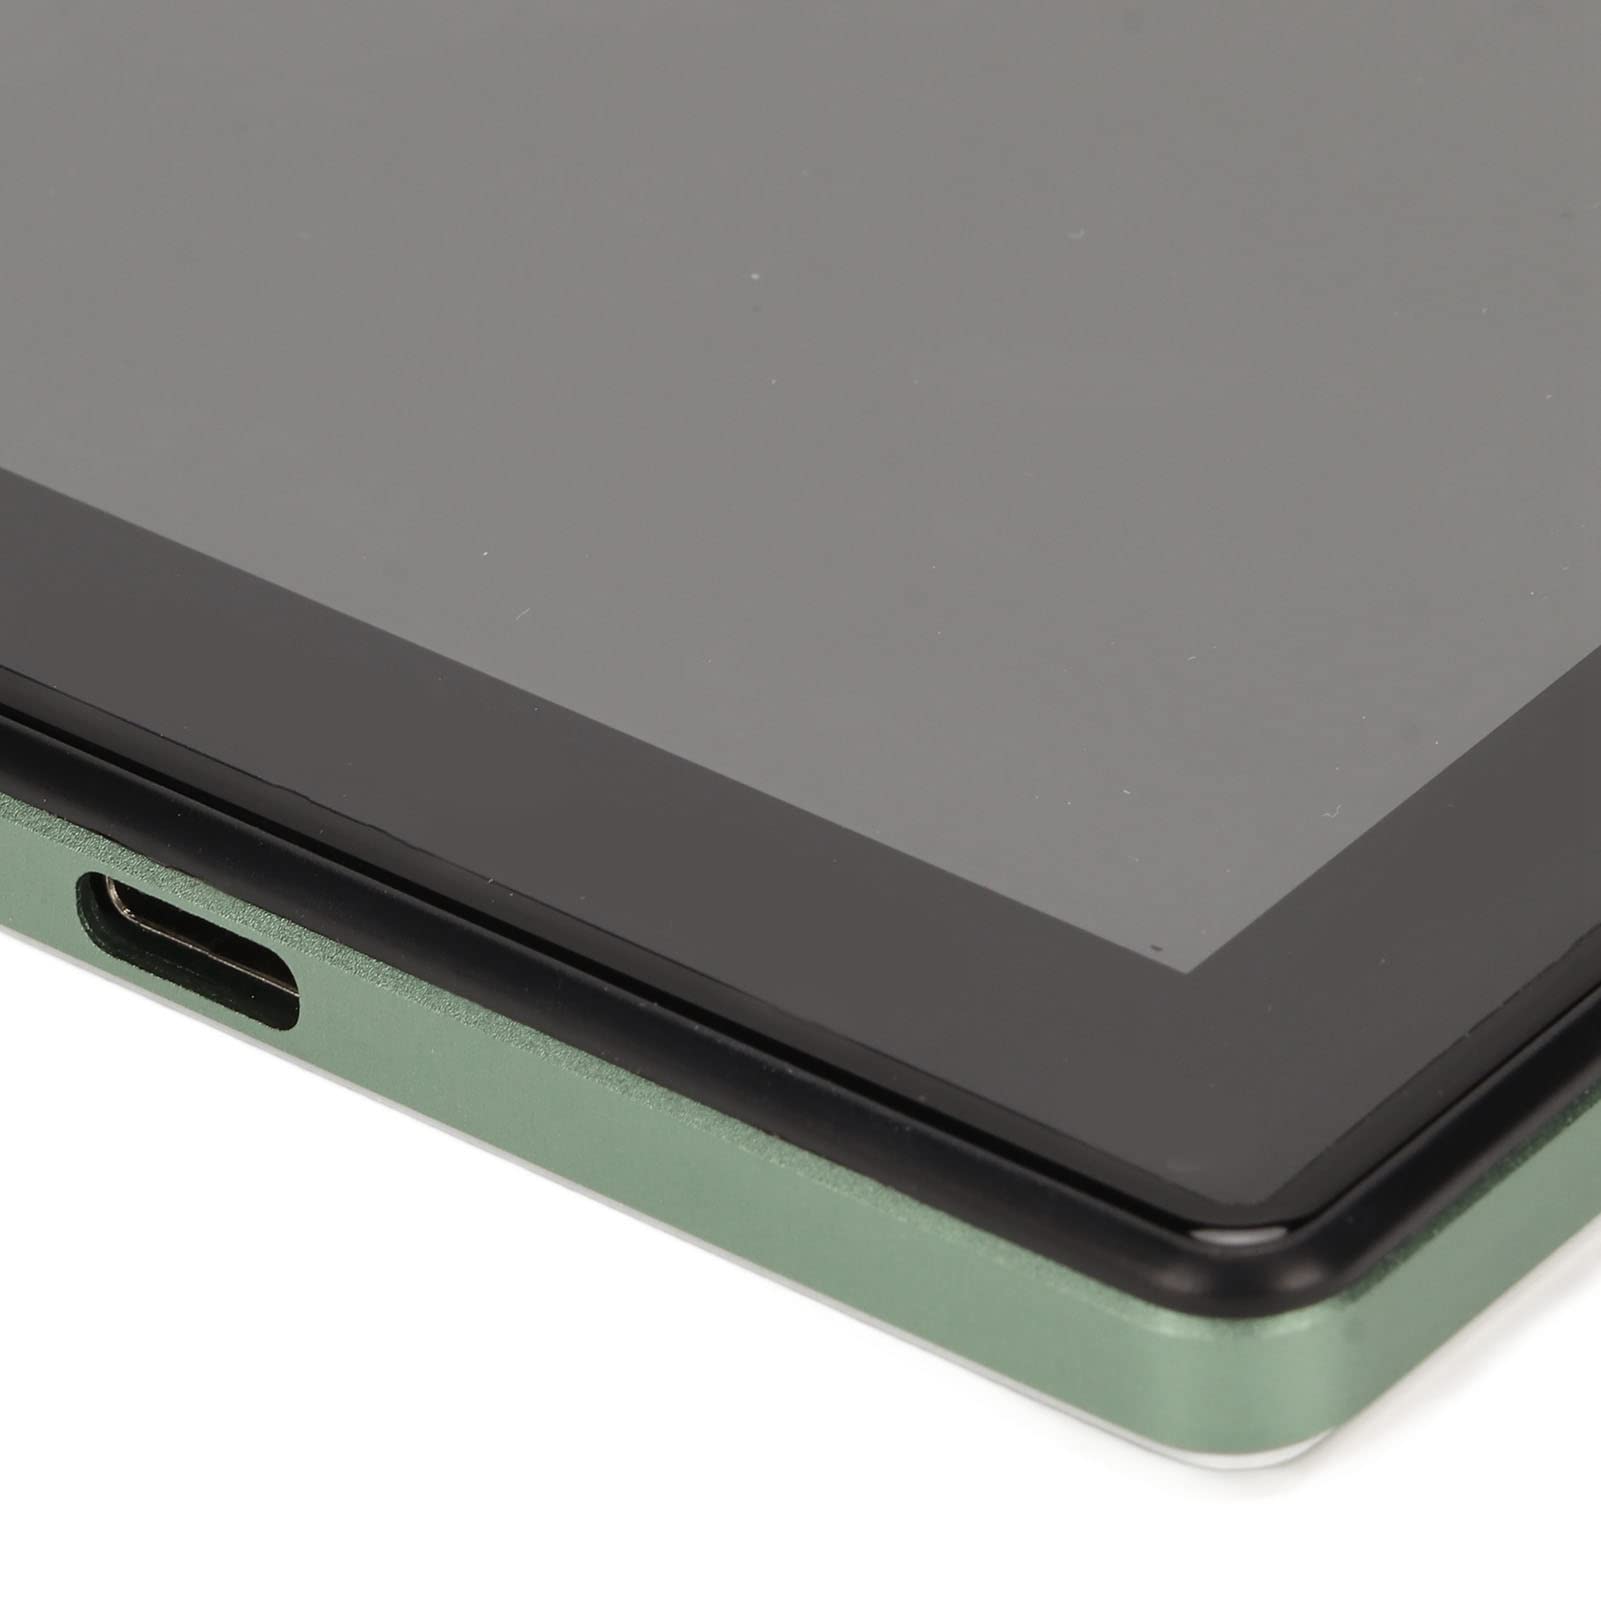 Naroote Kids Tablet, 10.1 Inch Tablet, 100-240V, Green, 1960 X 1080 IPS, for Talking (US Plug)